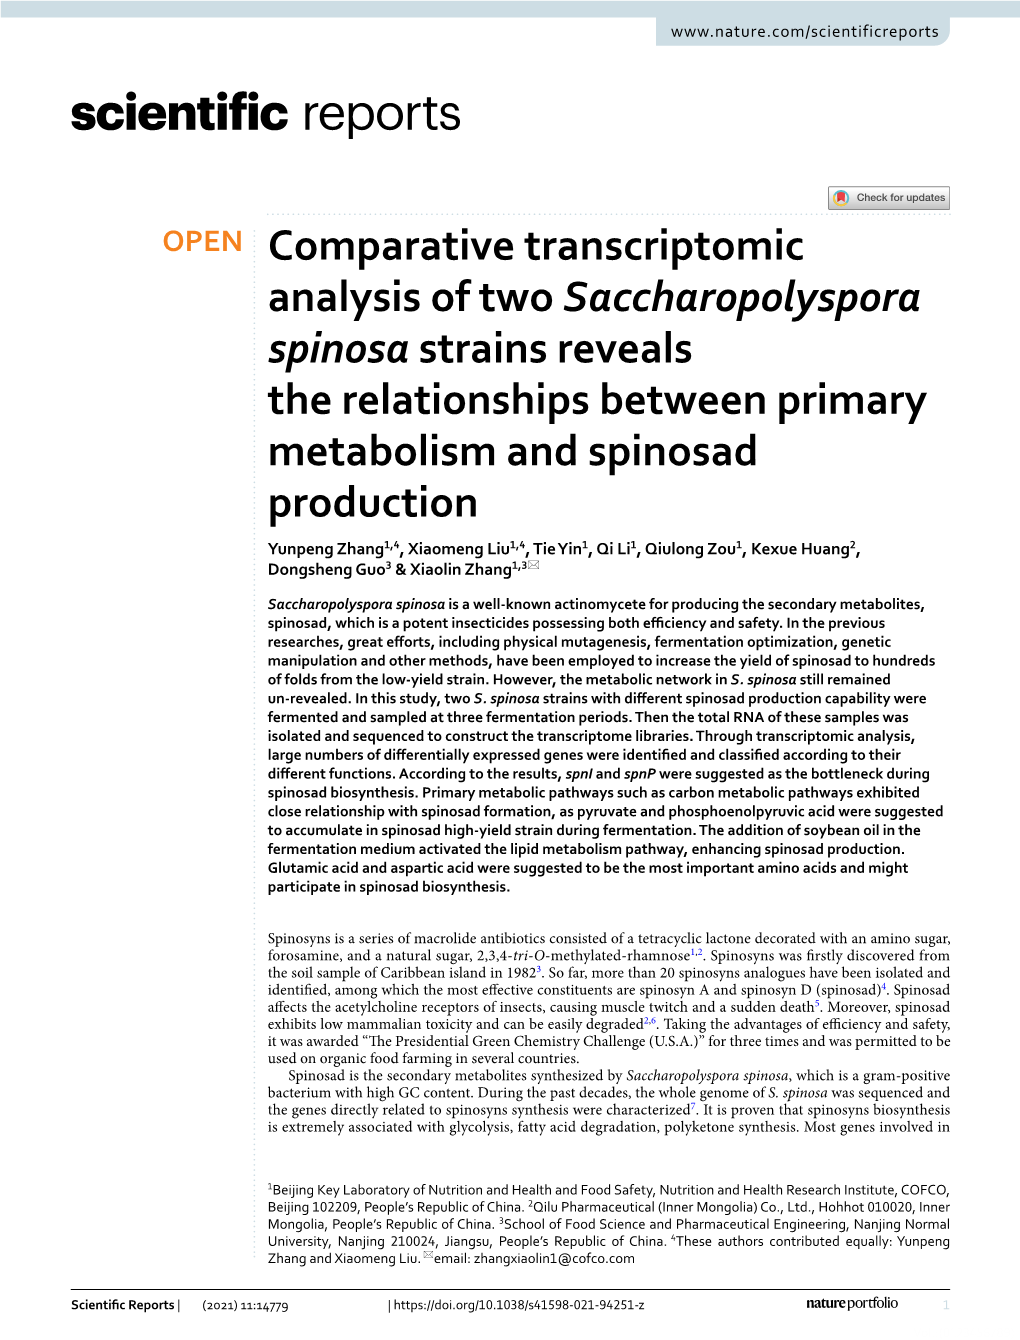 Comparative Transcriptomic Analysis of Two Saccharopolyspora Spinosa